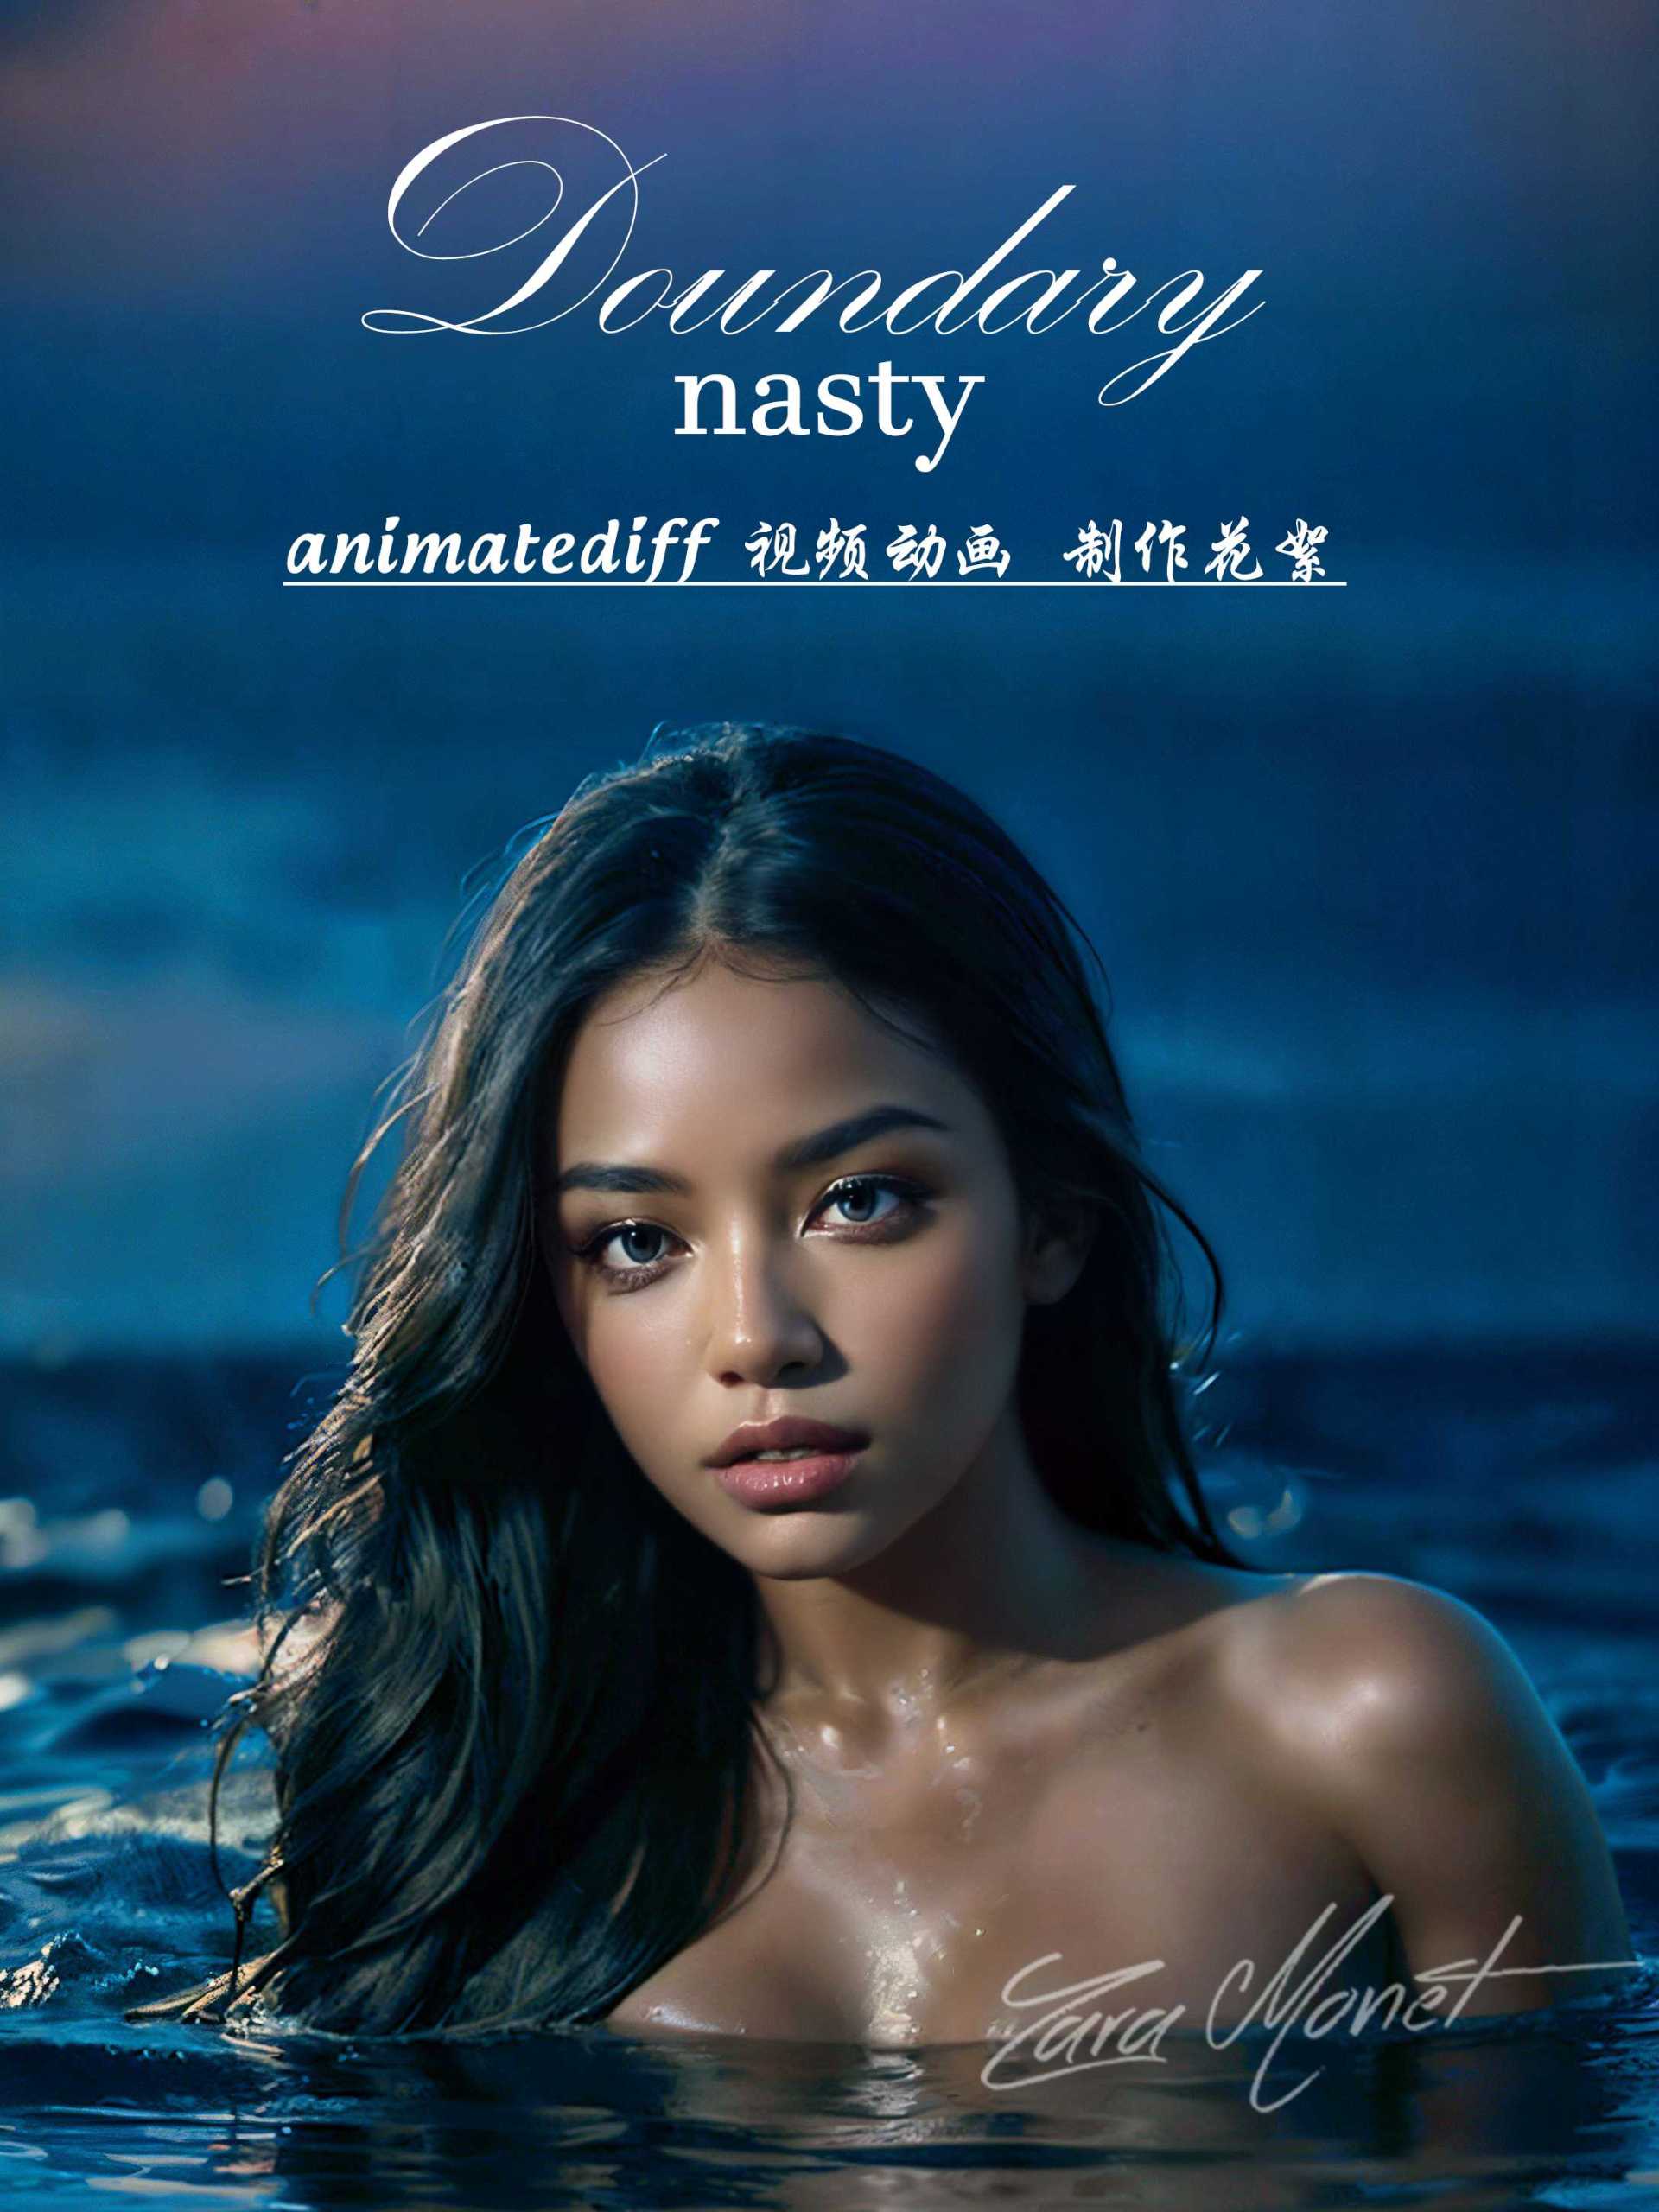 Nasty·Doundary边界香水广告|Zara Monet AI-花絮